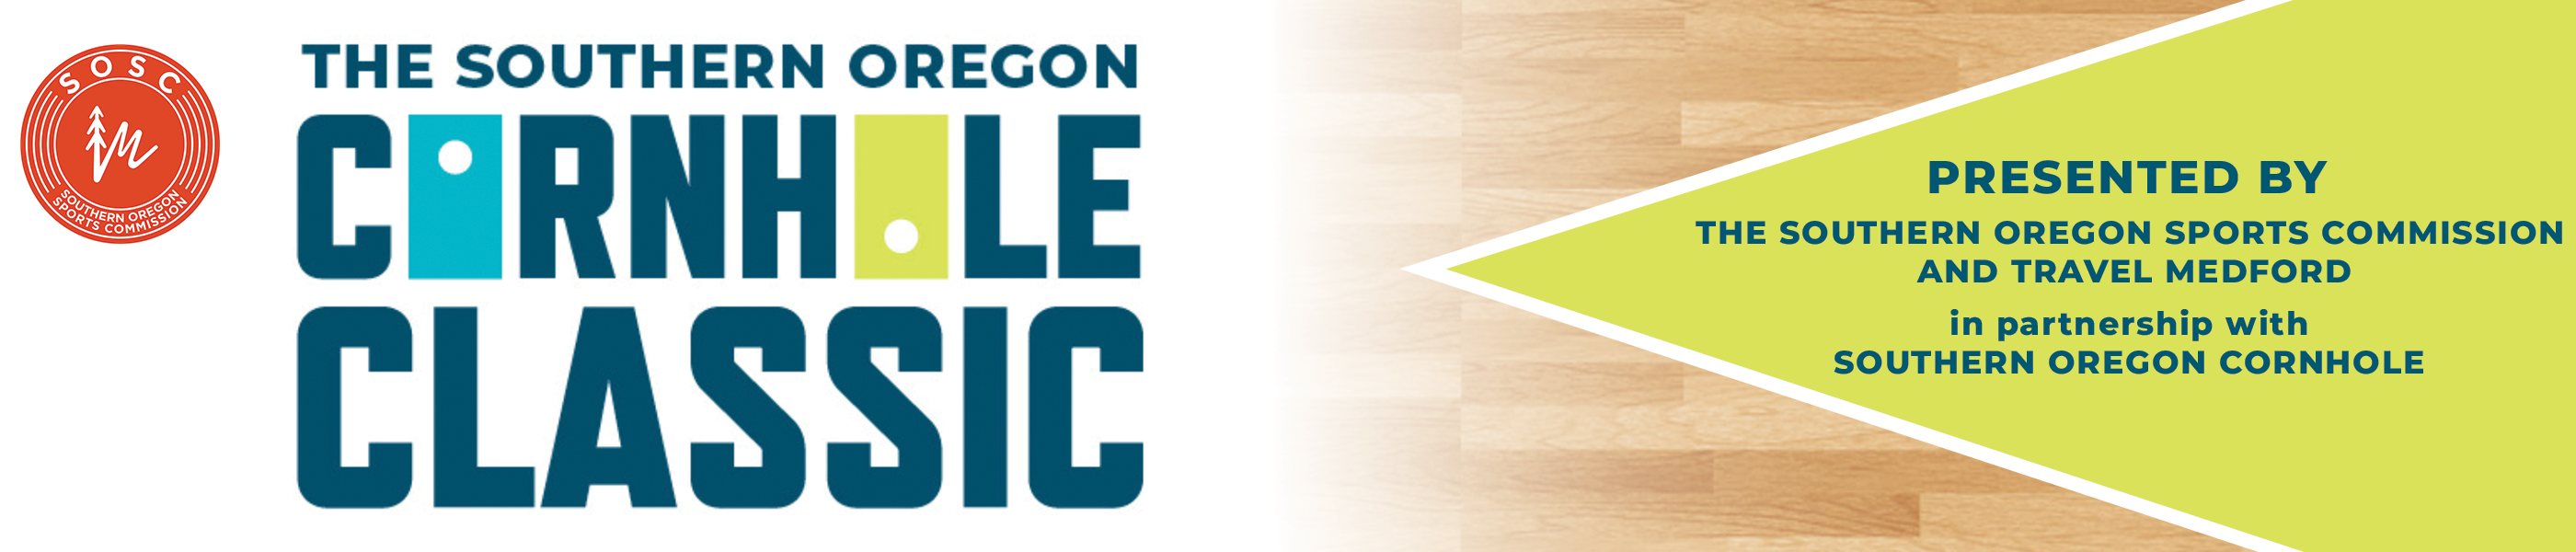 SOSC logo, southern oregon sports commission, sports, southern oregon cornhole classic 2022